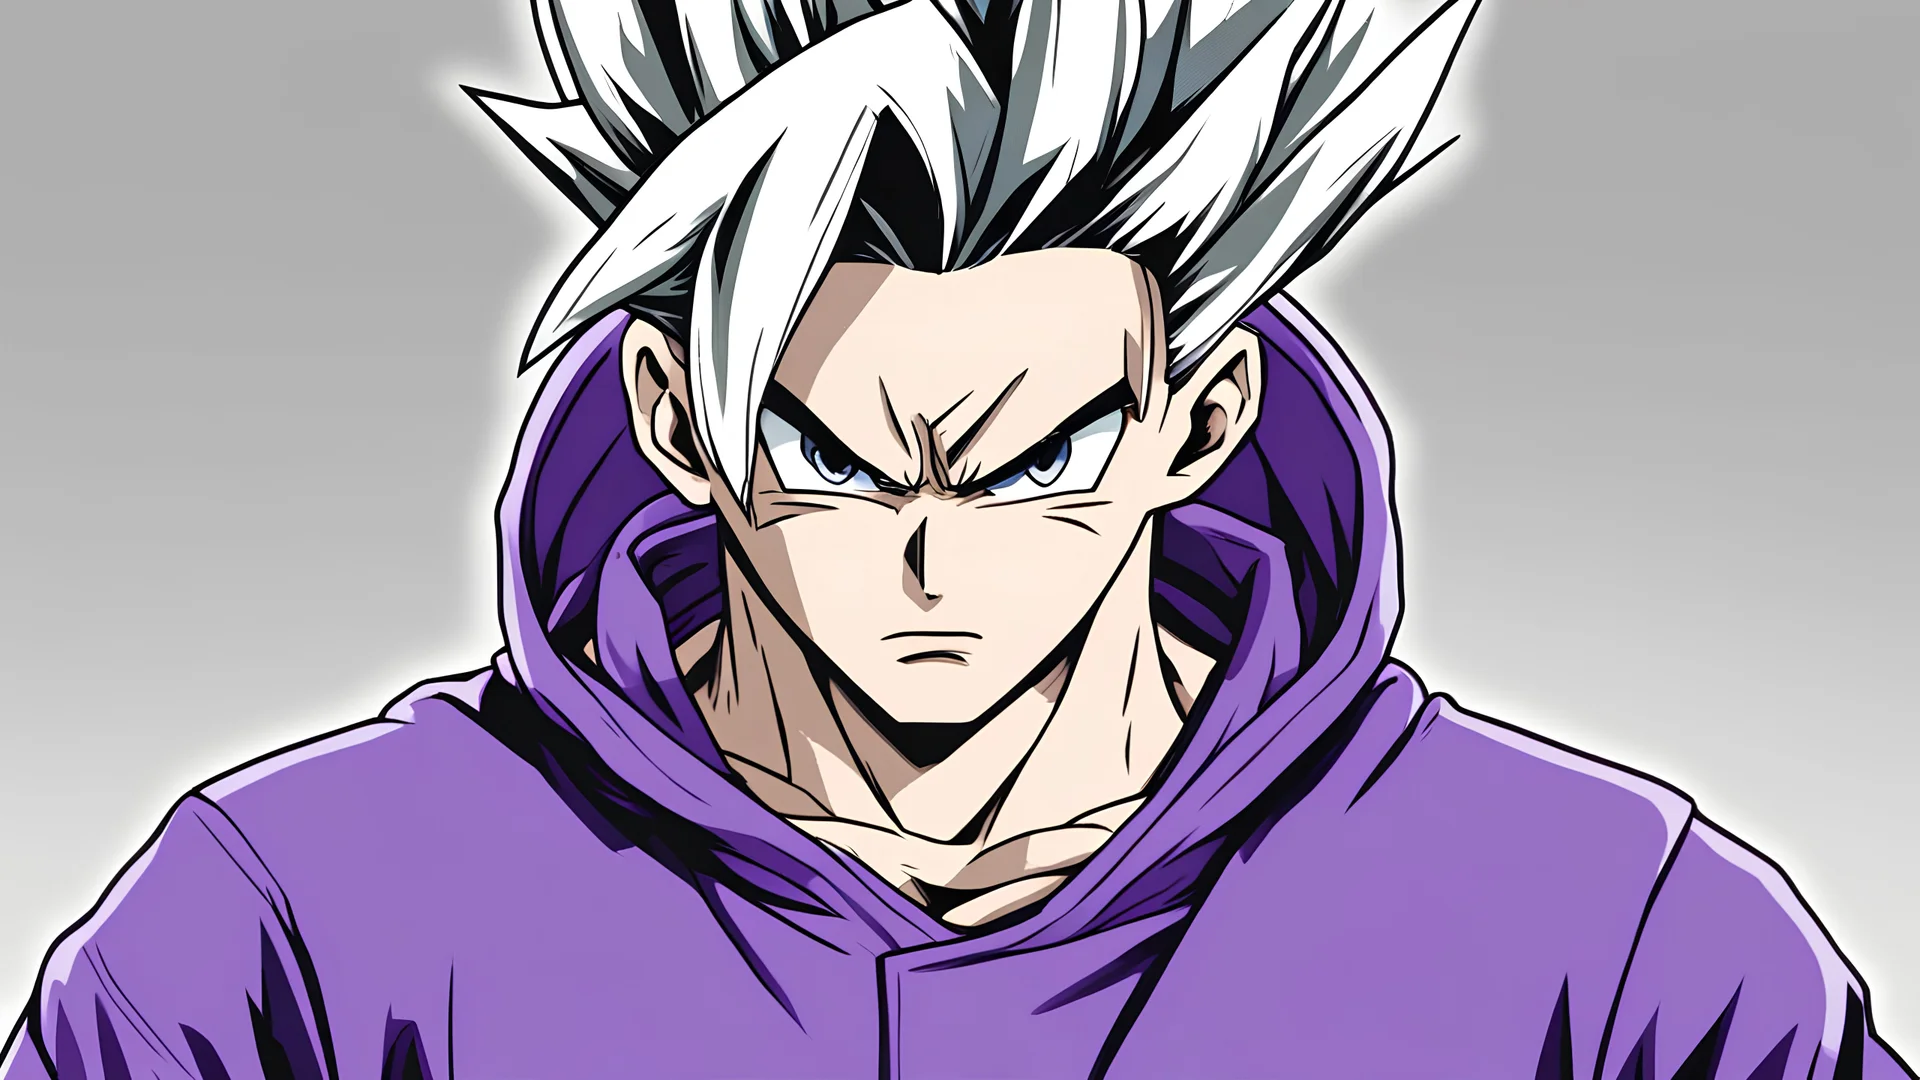 Gohan in a purple hoodie in the dragon ball super manga style